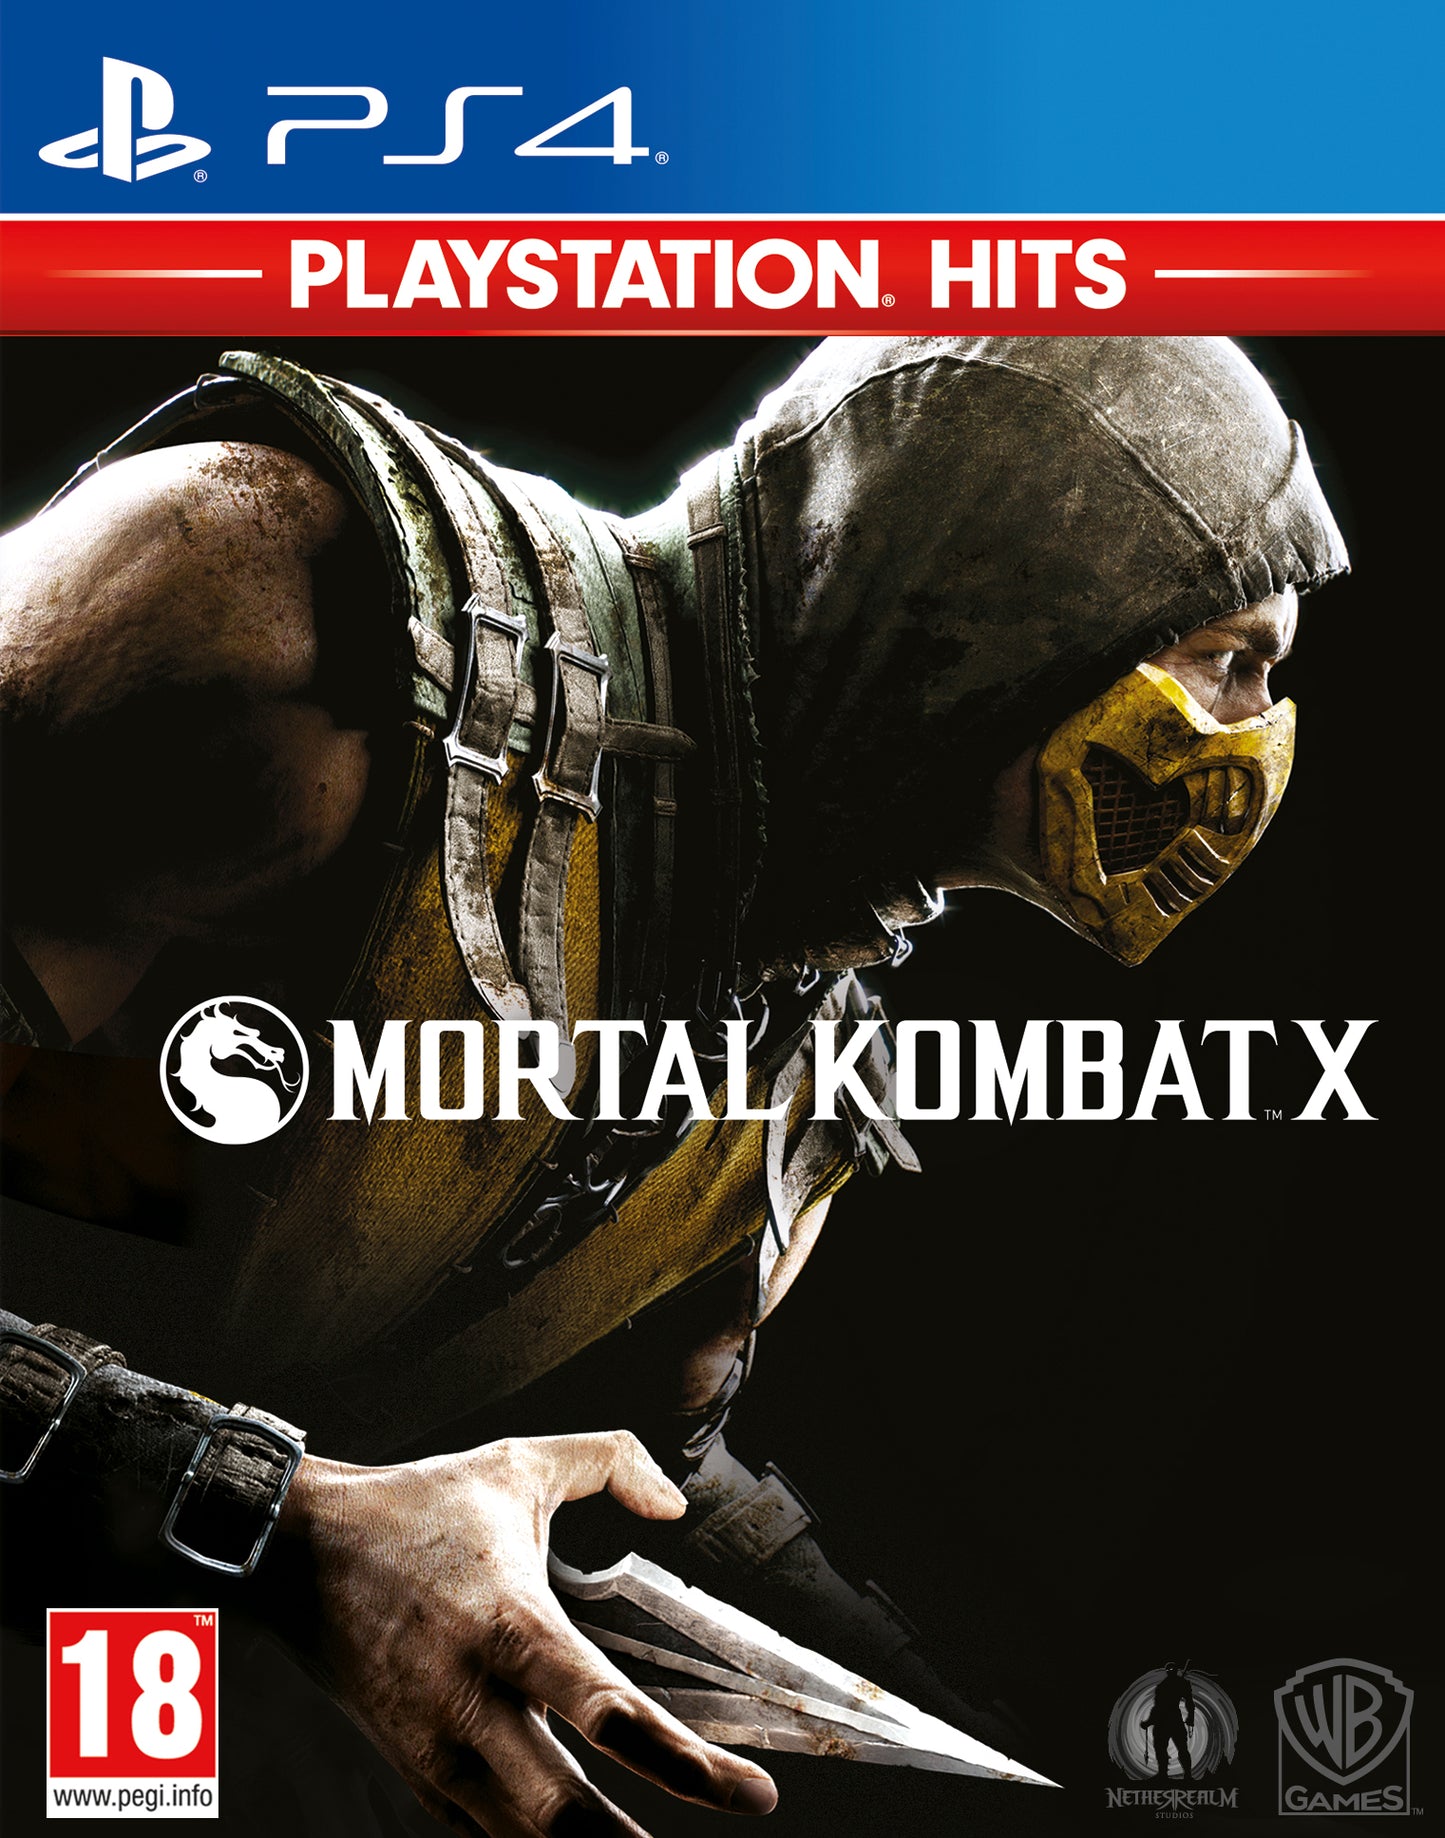 Playstation hits edition Mortal Kombat X video game for playstation 4